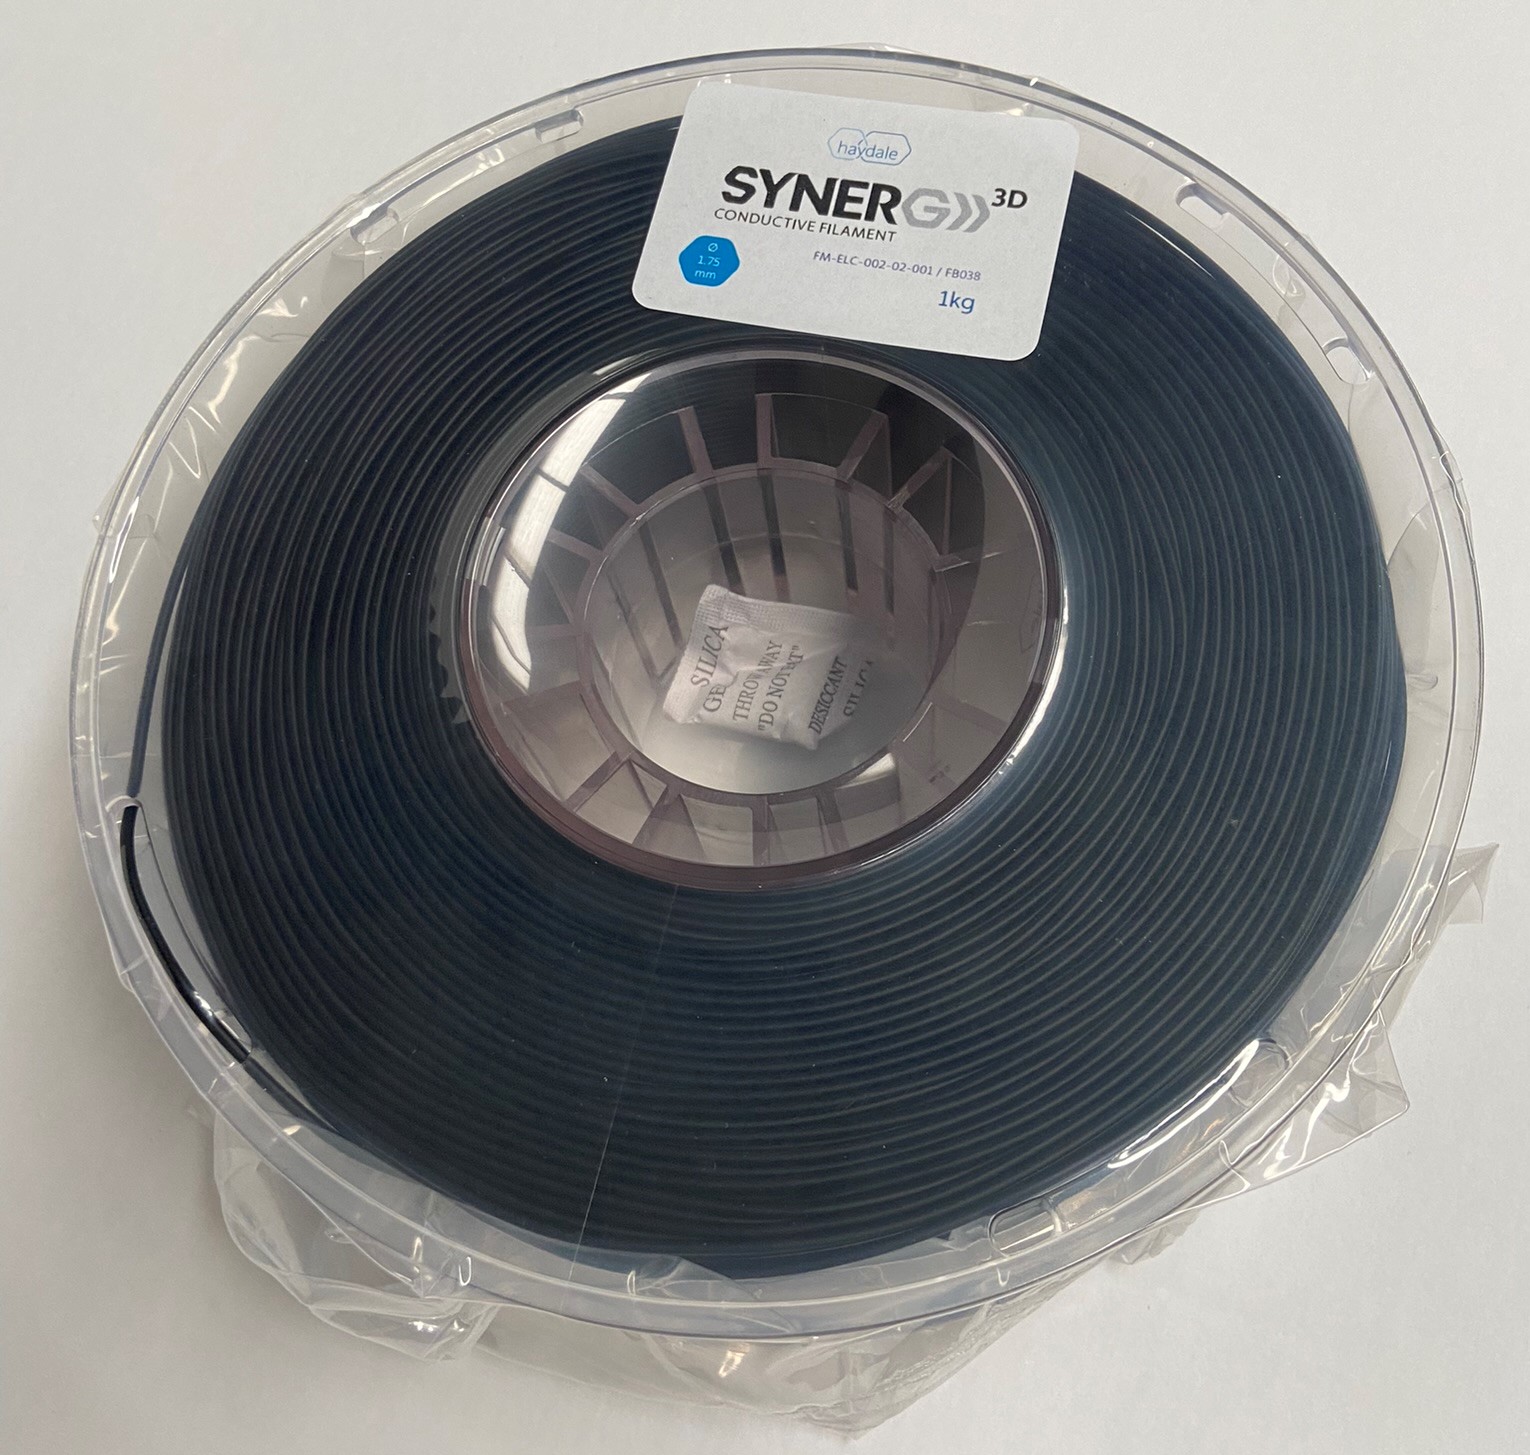 Haydale SynerG 3D Conductive PLA Filament 2.85mm 1KG